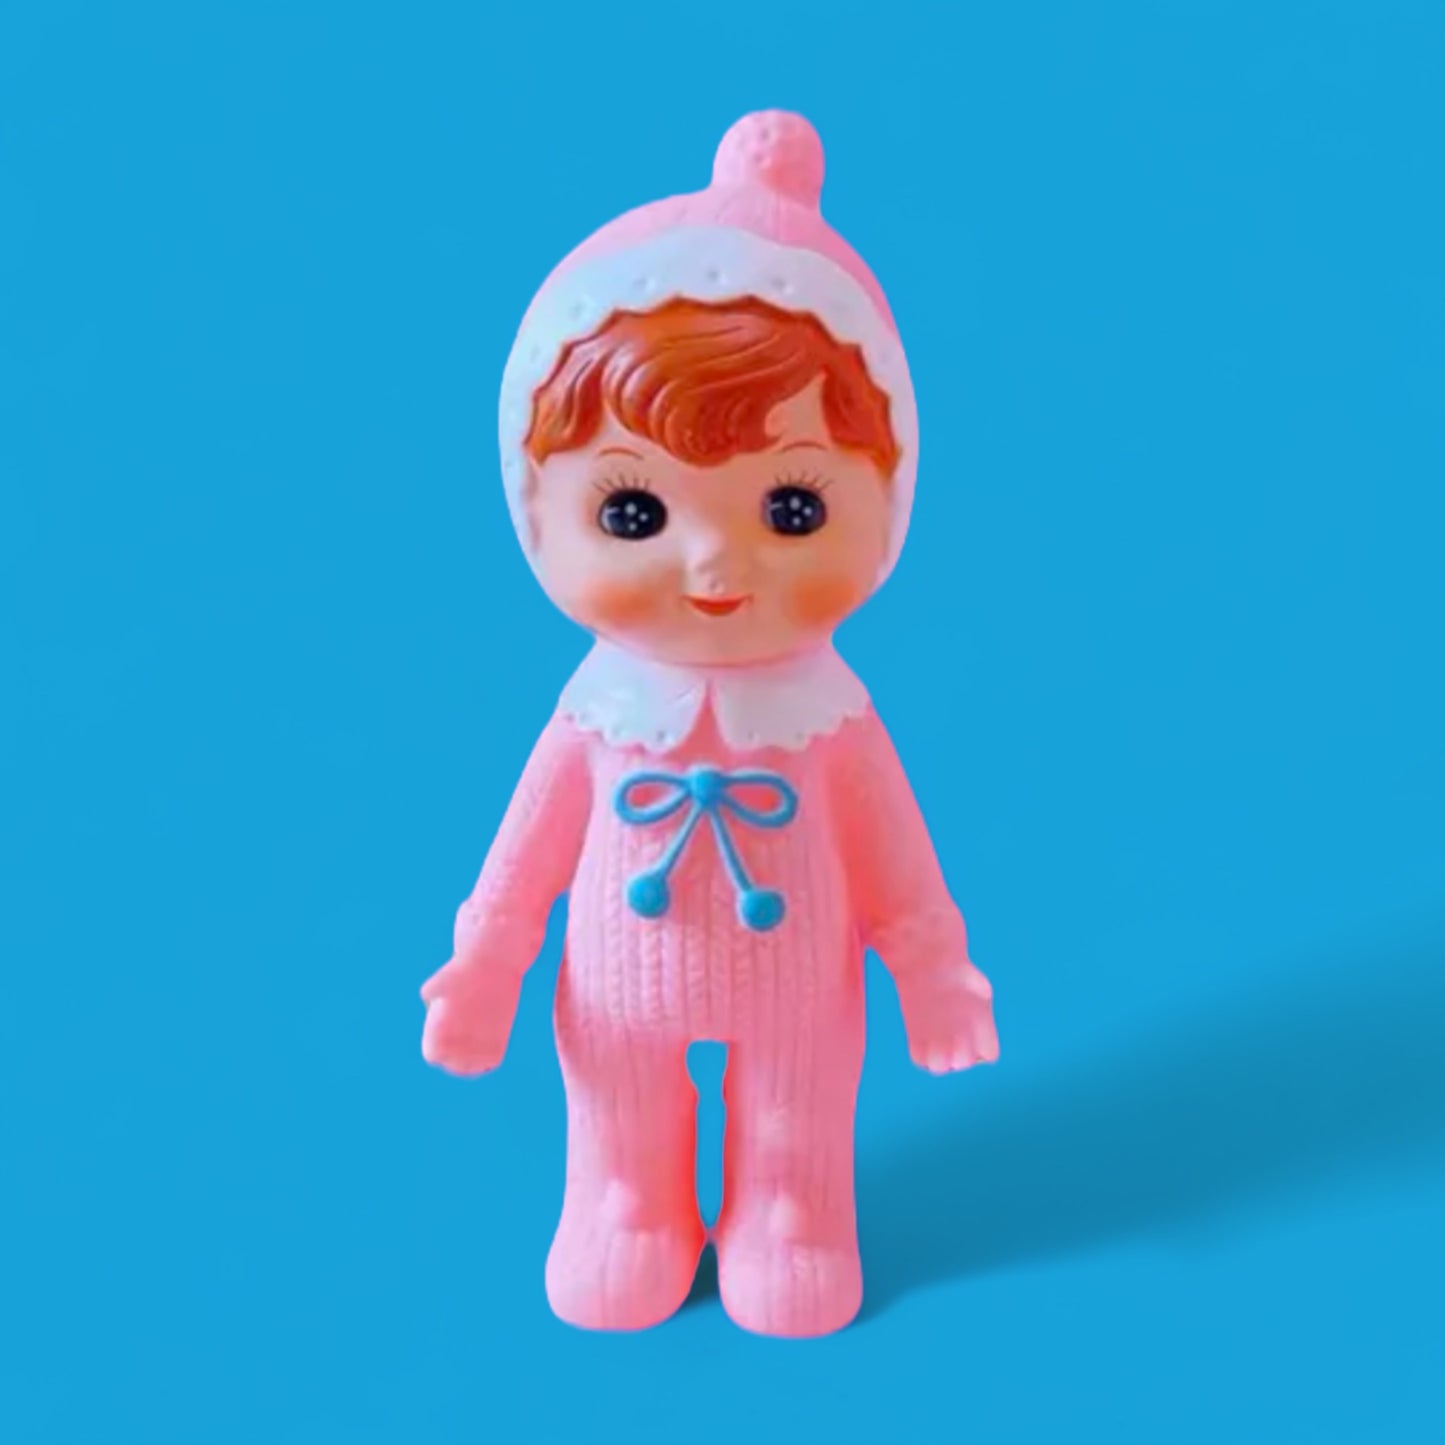 Retro Baby Doll - Pink